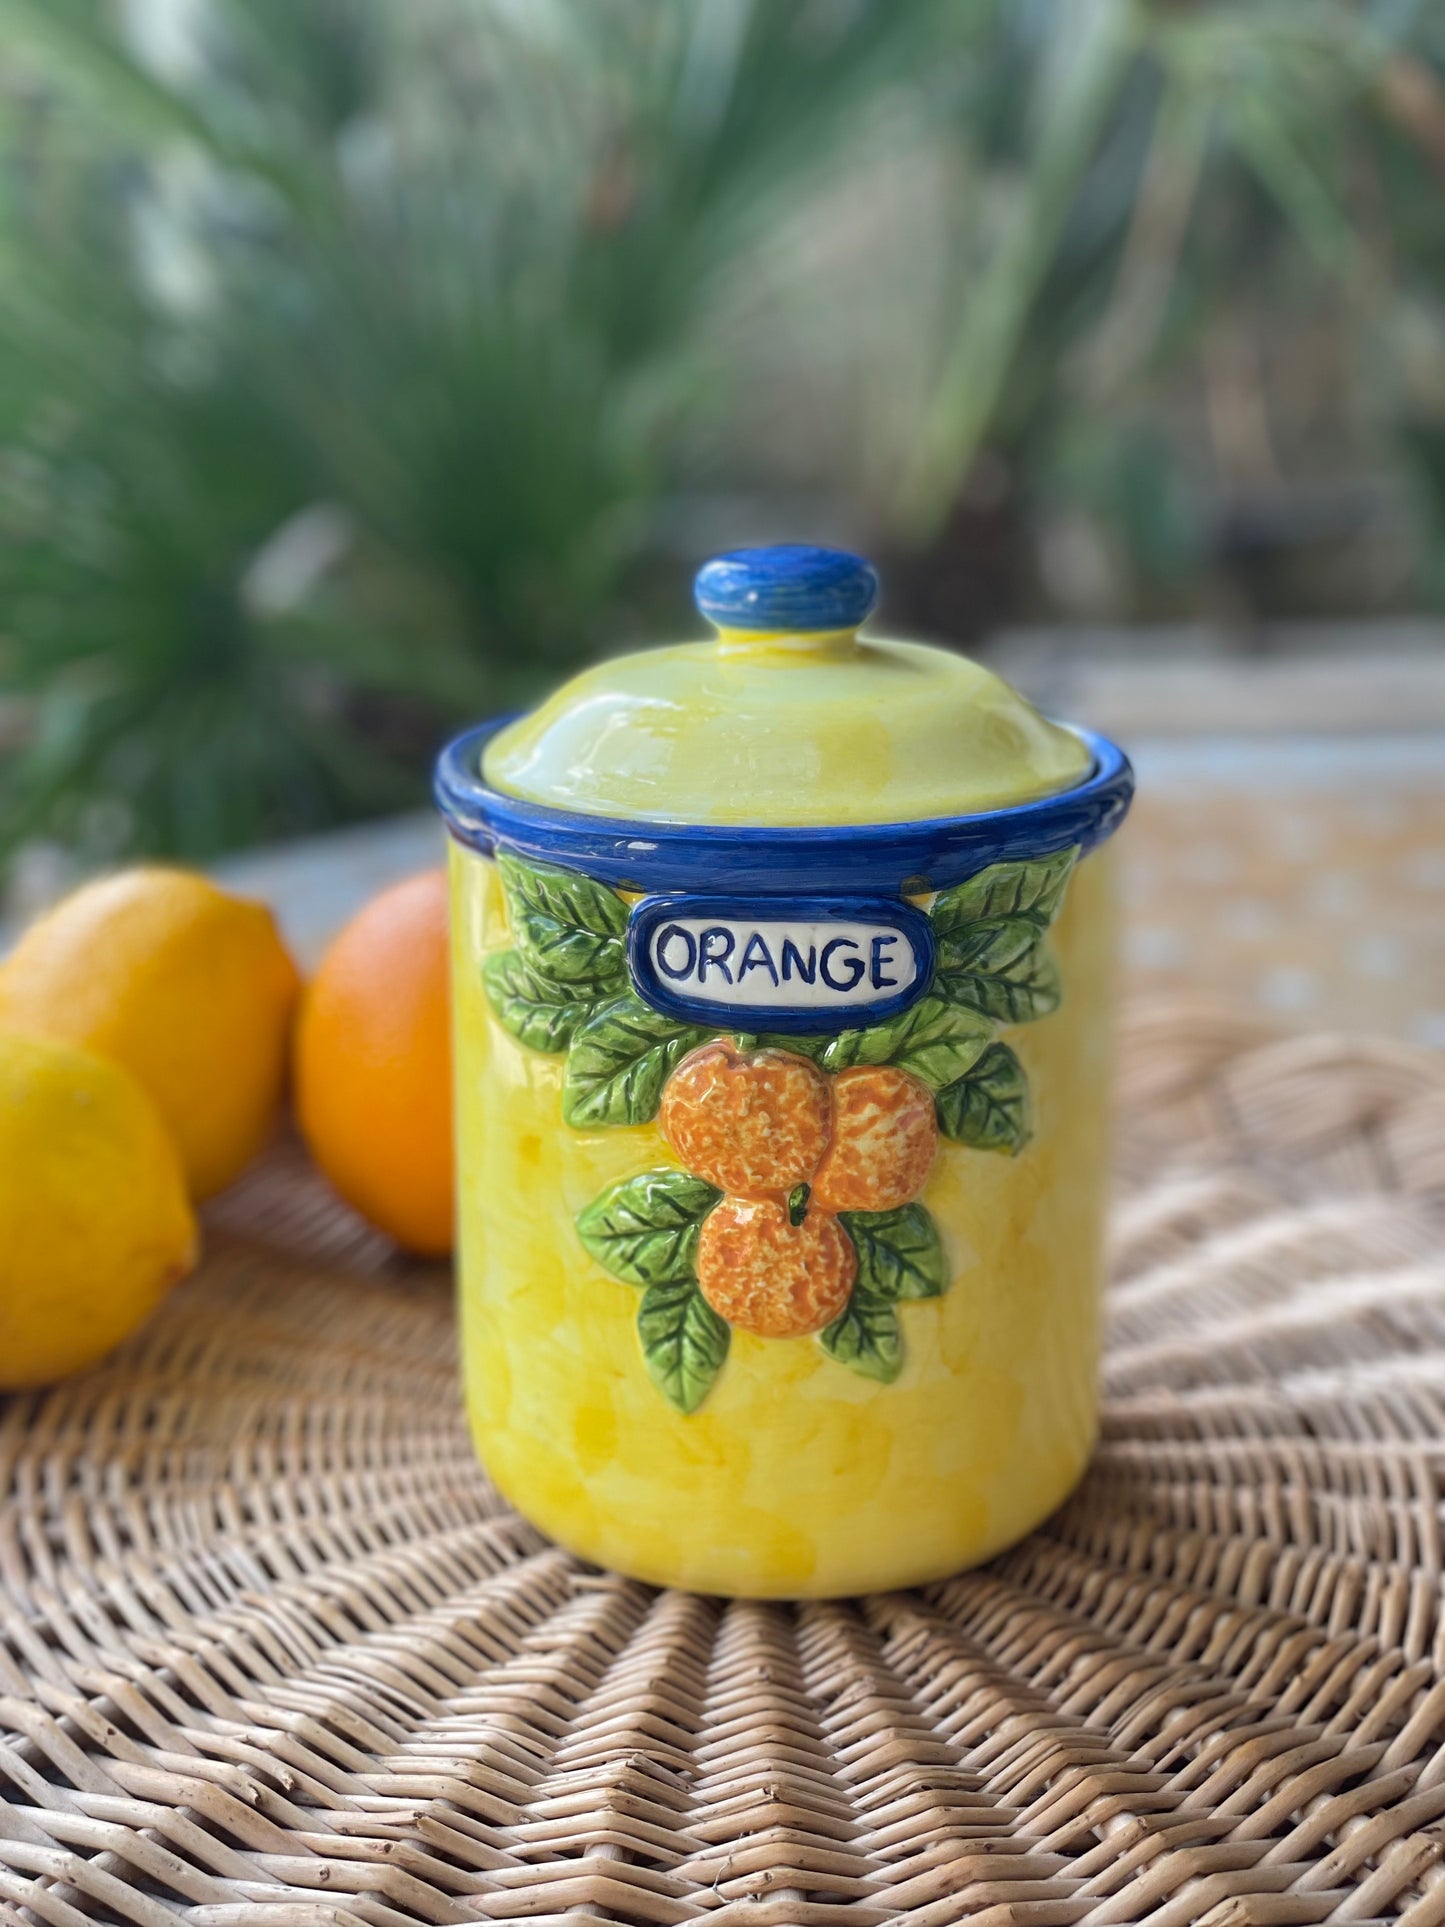 Grand pot orange